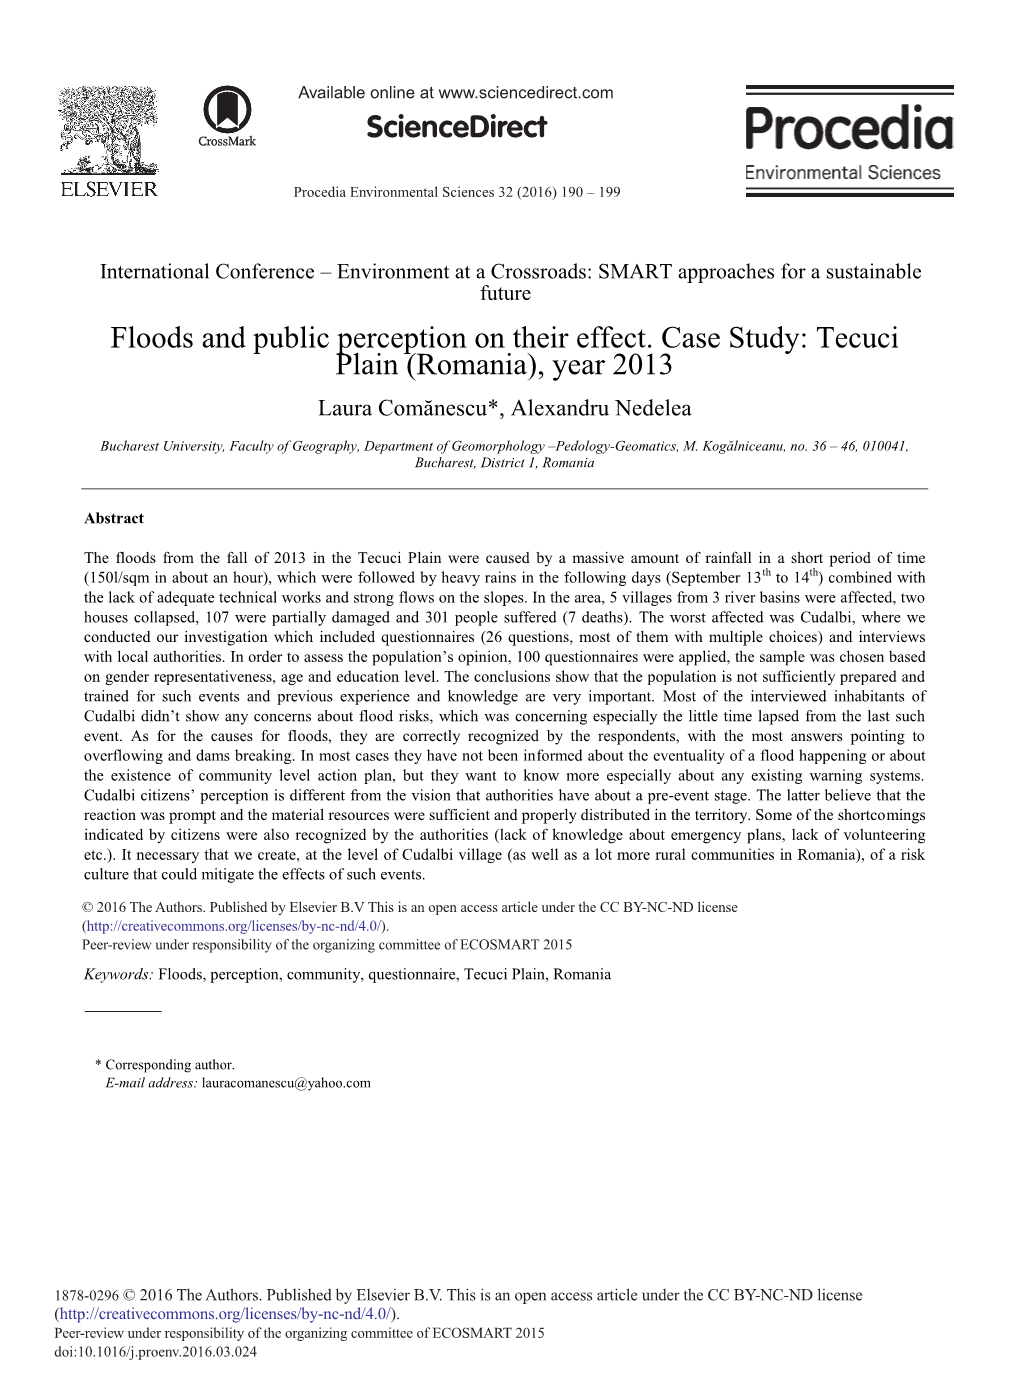 Floods and Public Perception on Their Effect. Case Study: Tecuci Plain (Romania), Year 2013